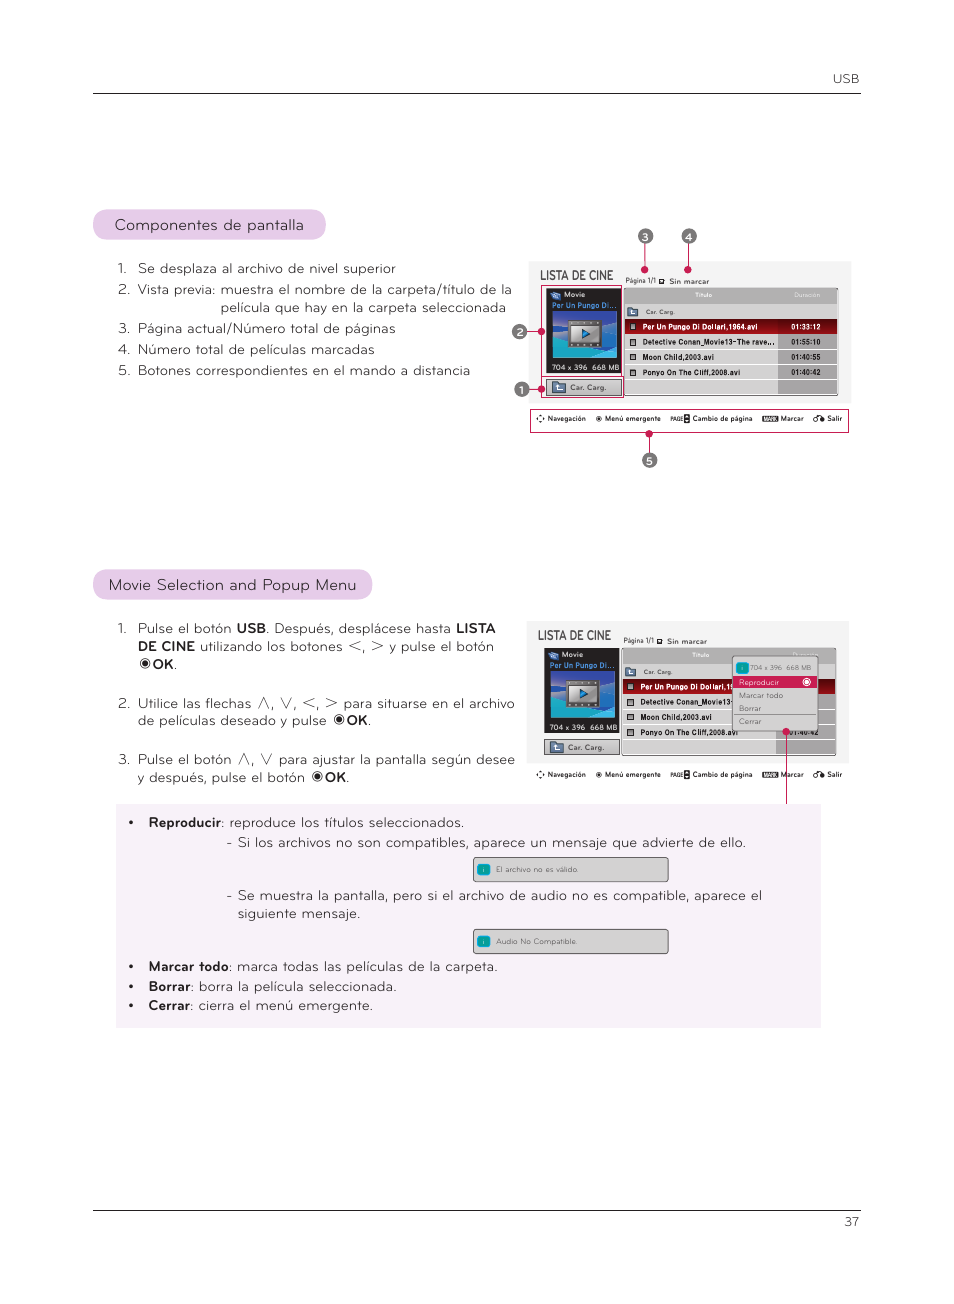 Movie selection and popup menu, Componentes de pantalla | LG HX300G Manual del usuario | Página 37 / 44